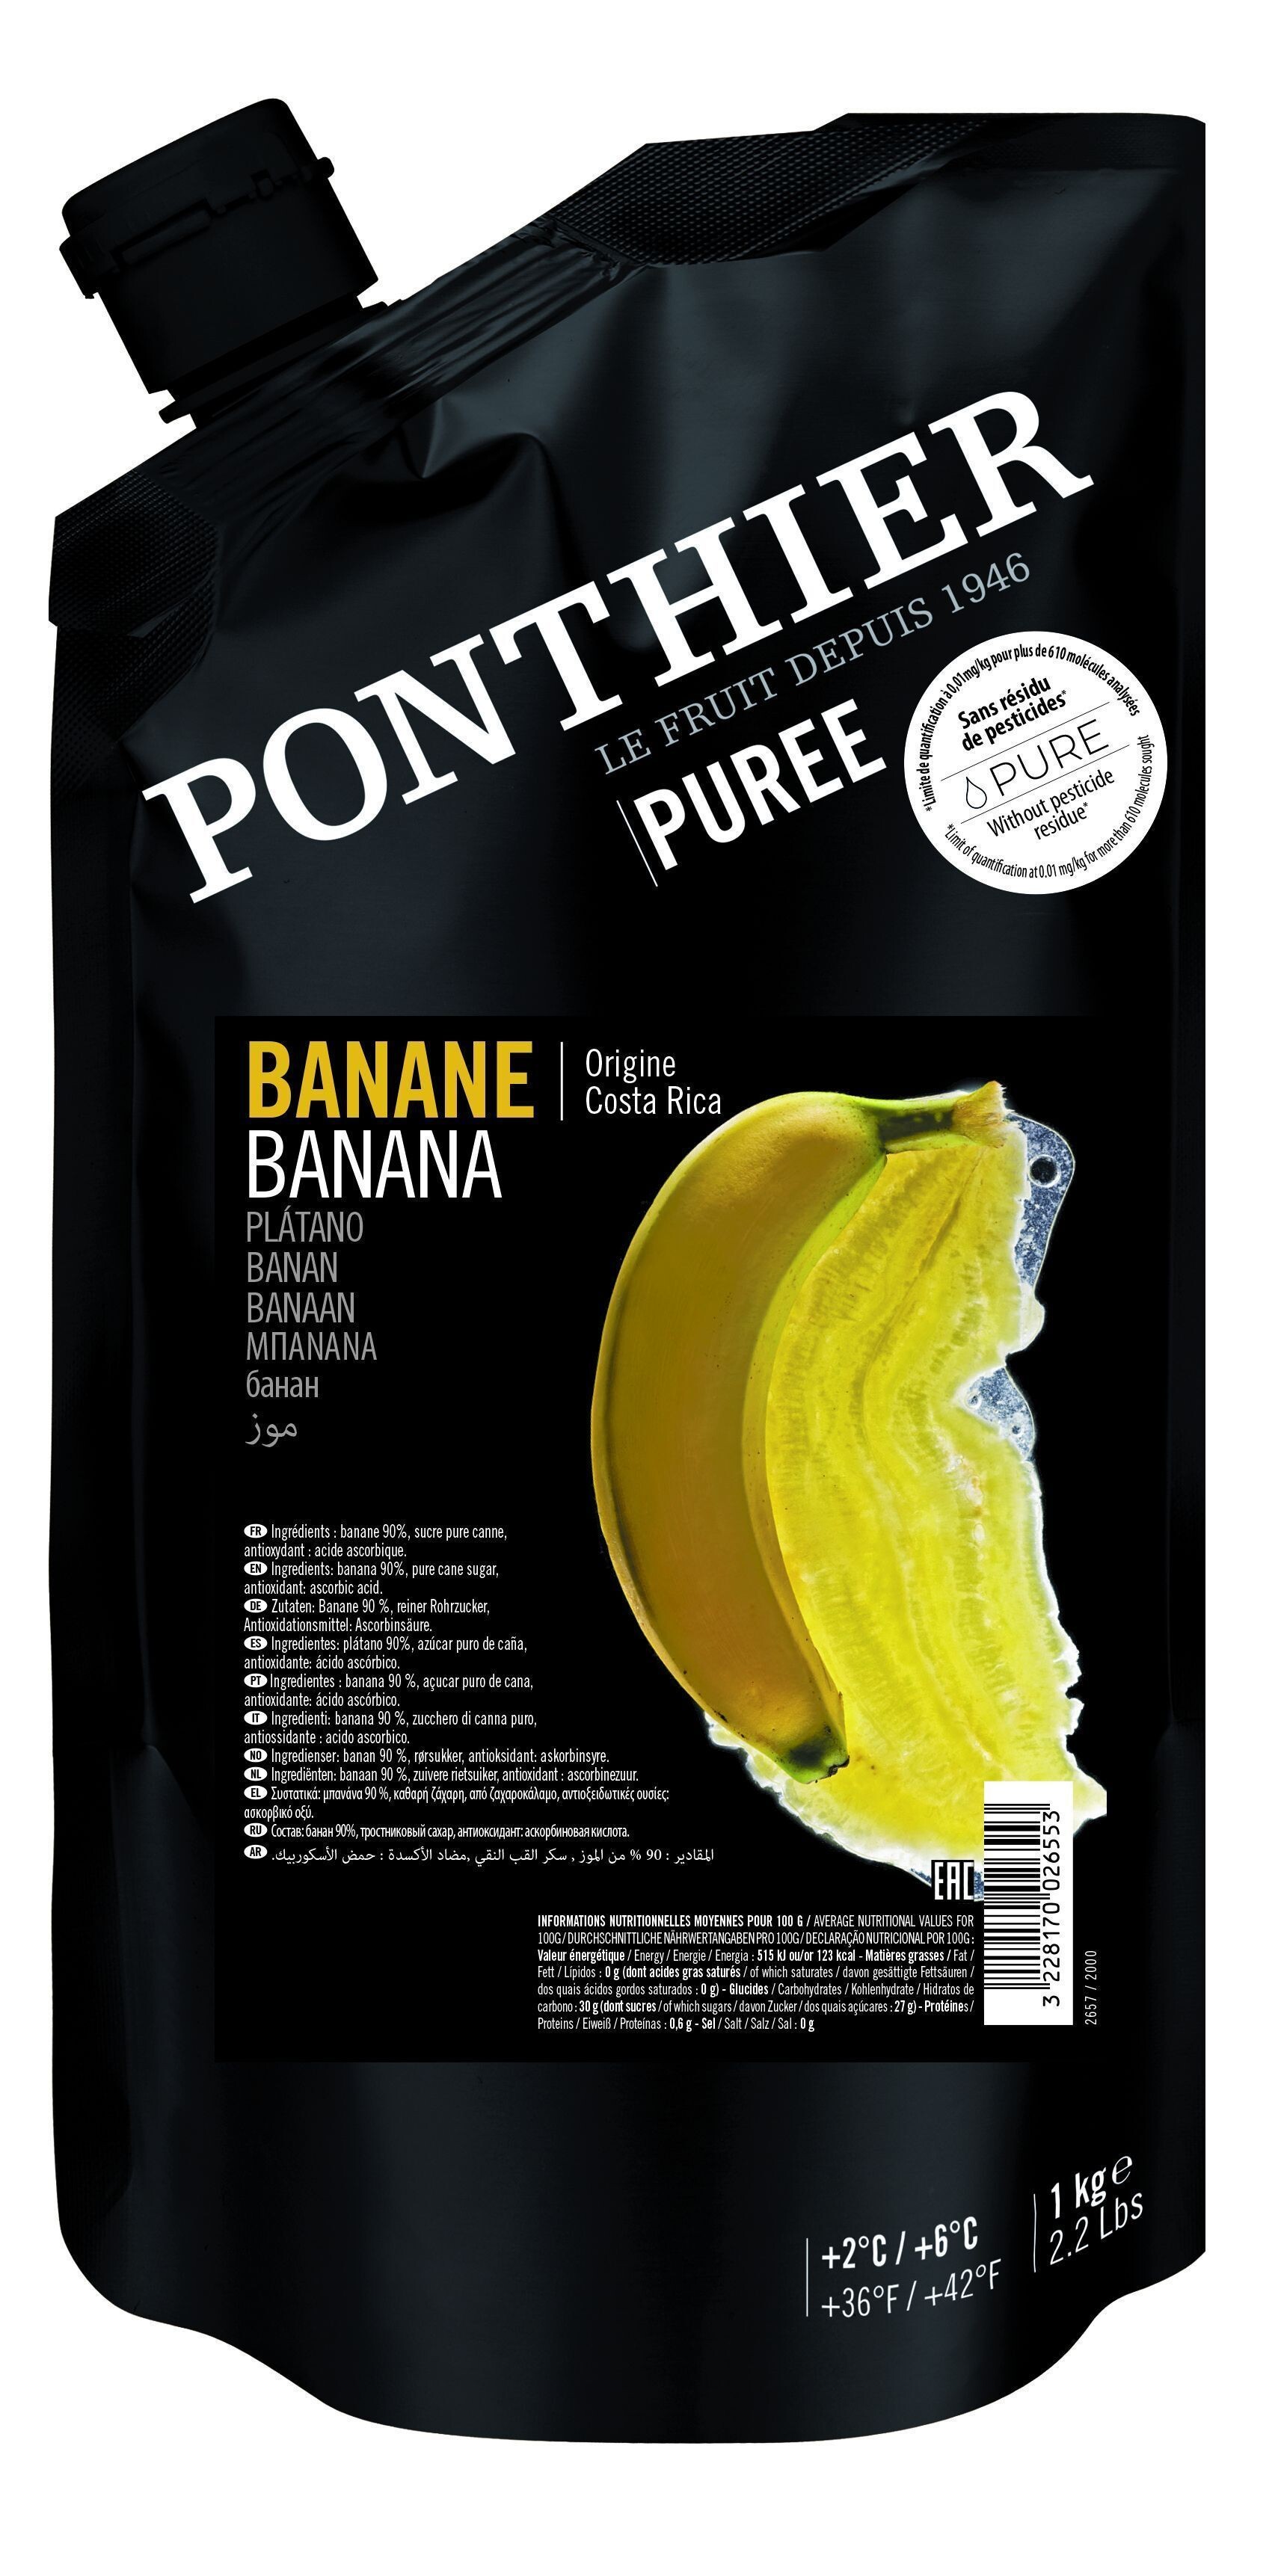 Ponthier Fruit Puree Banana 1kg